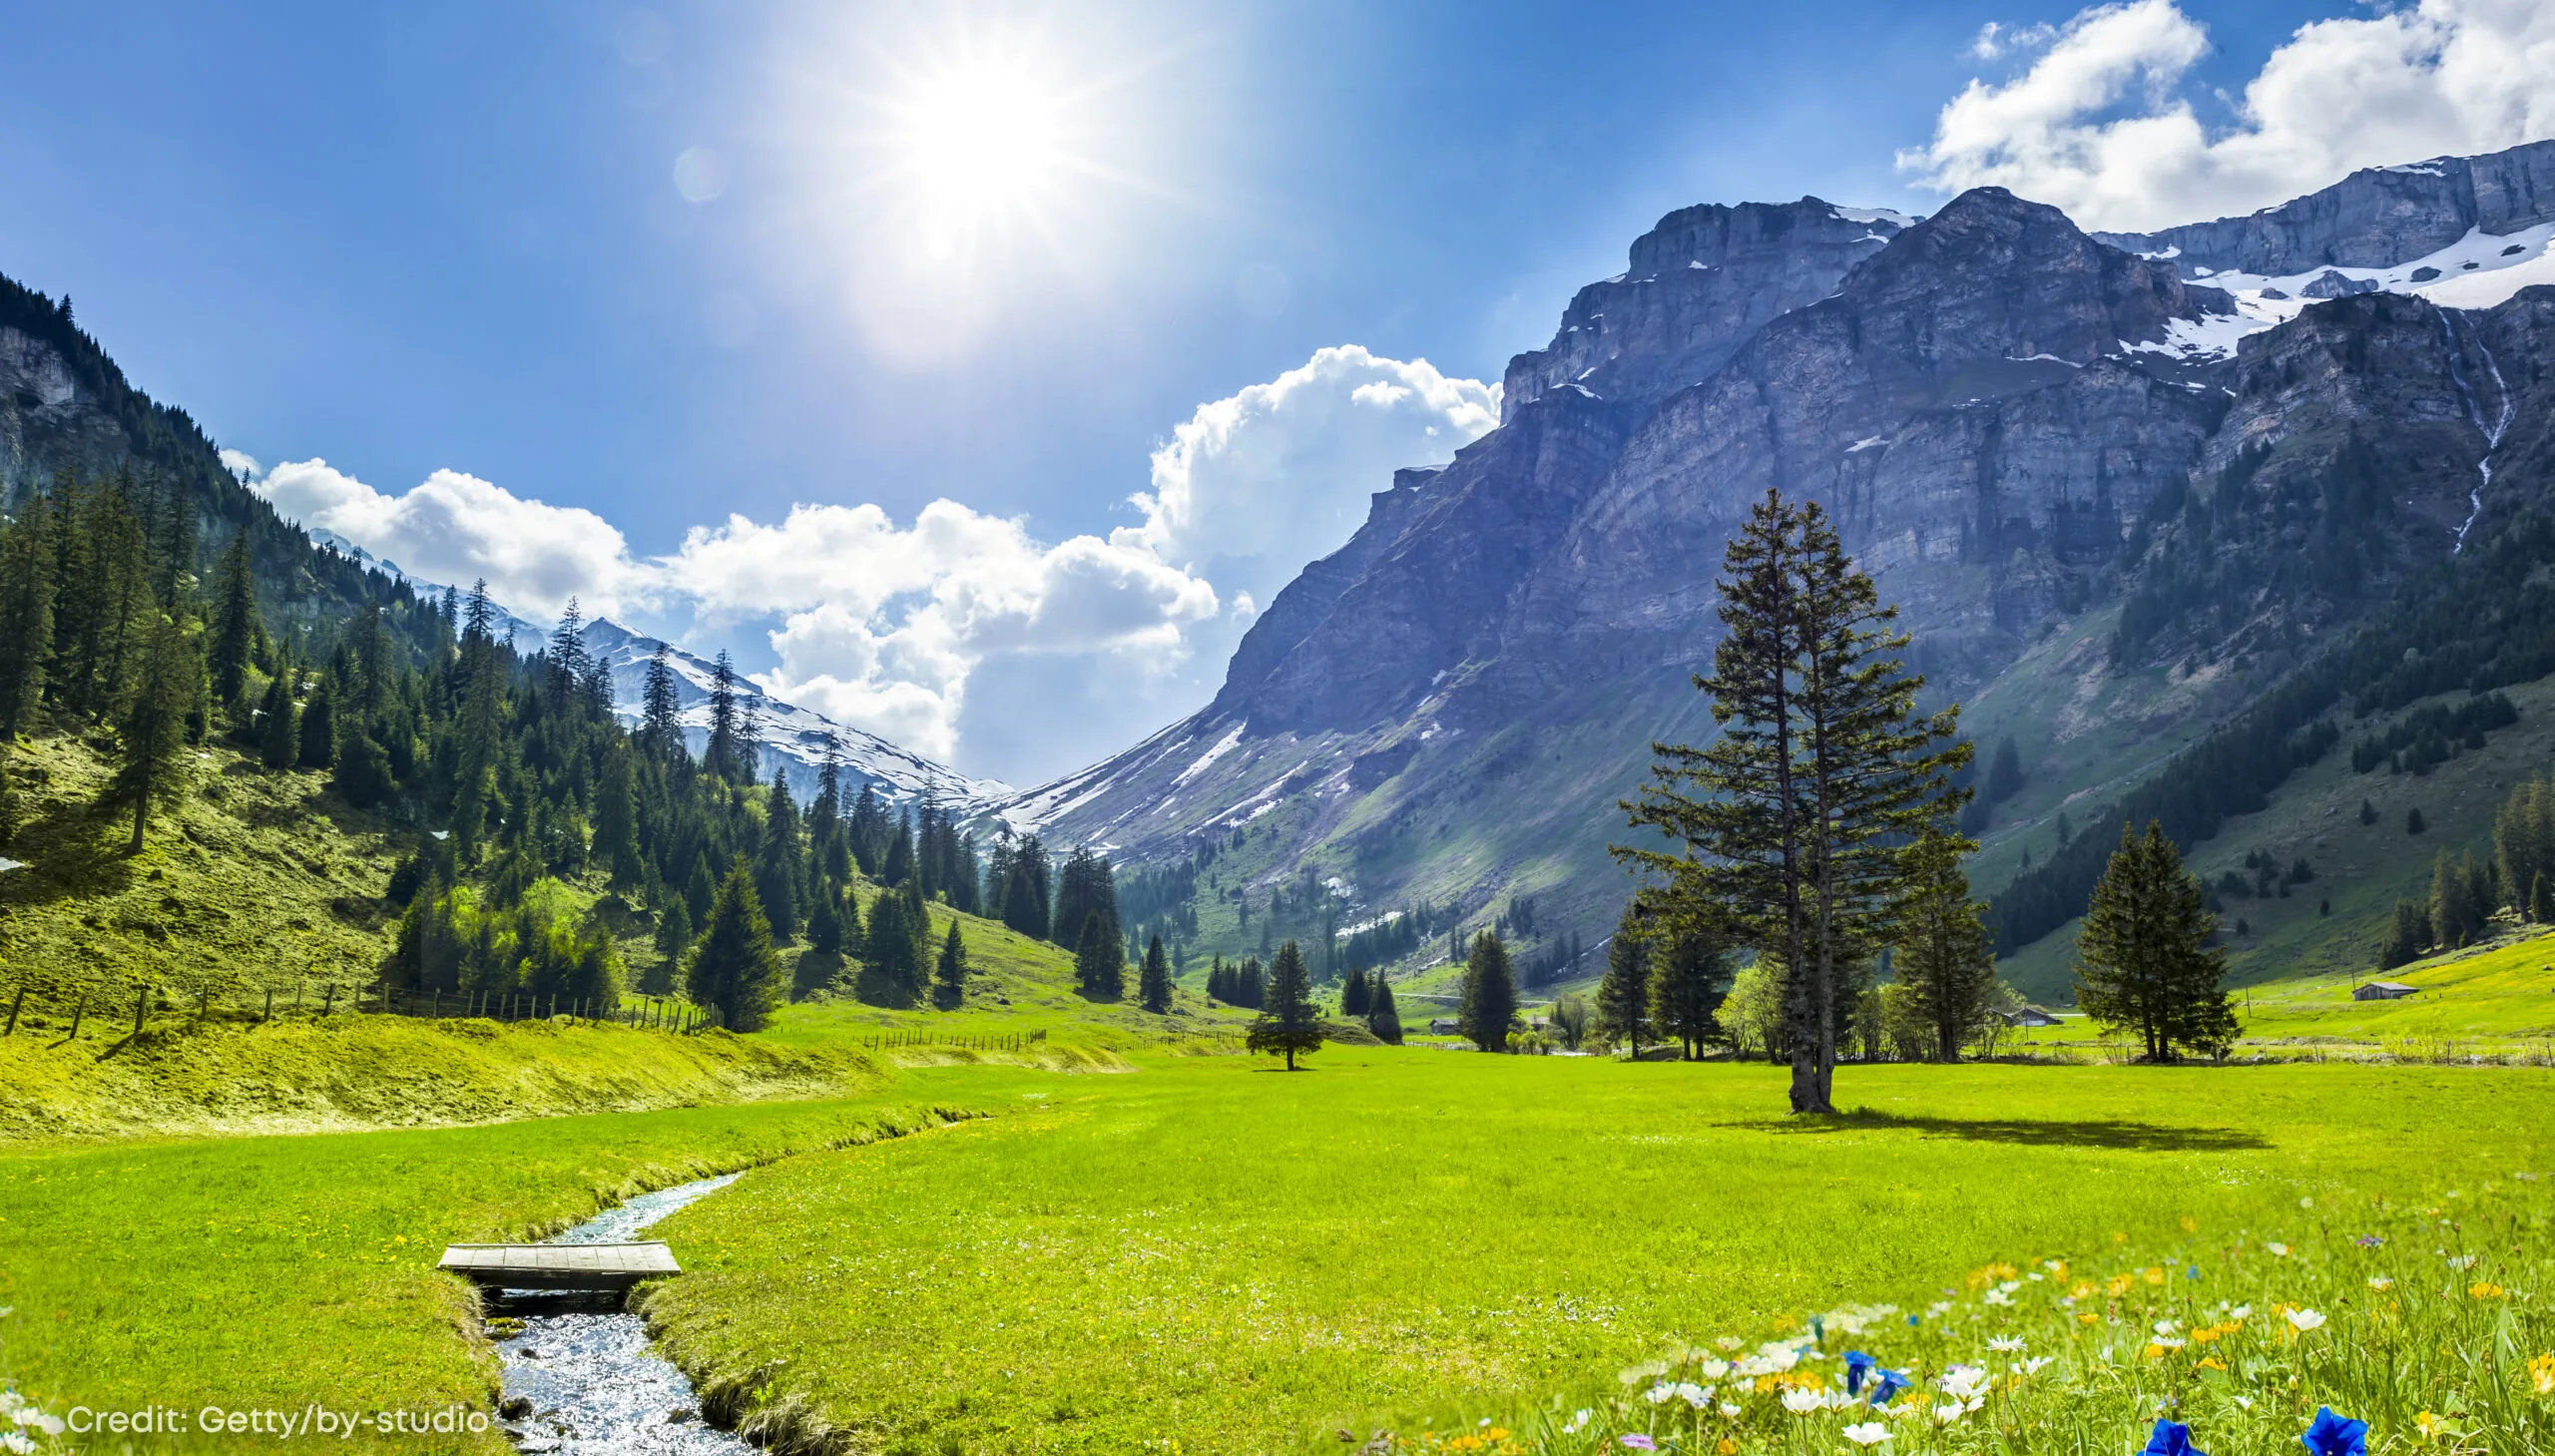 One of many beautiful landscapes of Switzerland